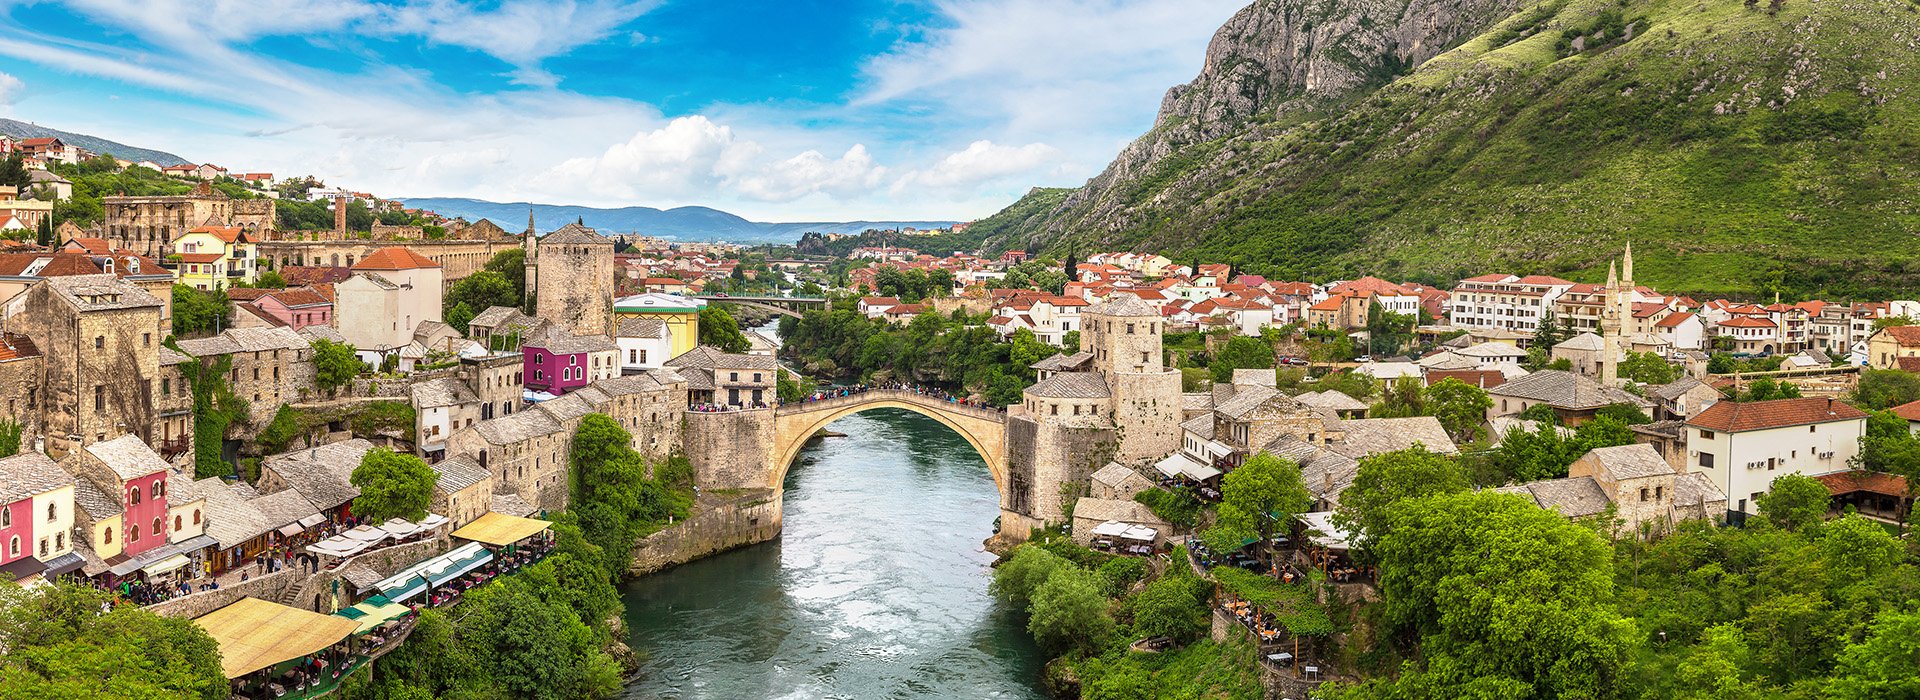 bosnia and herzegovina covid 19 travel restrictions